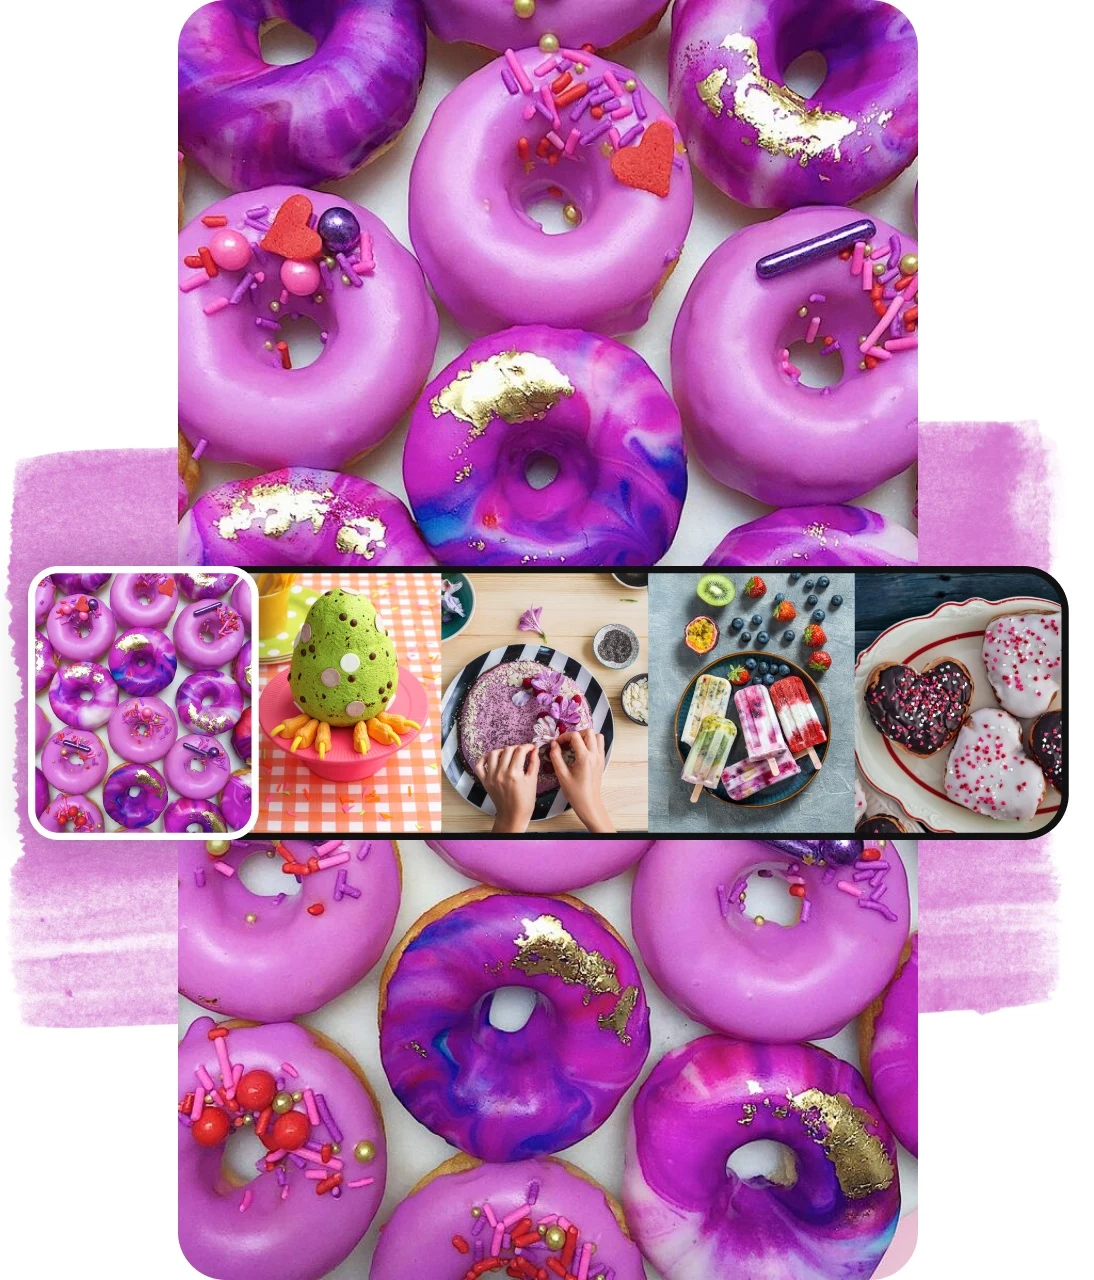 Cover-Bild-Auswahl über Pin mit lila Donuts